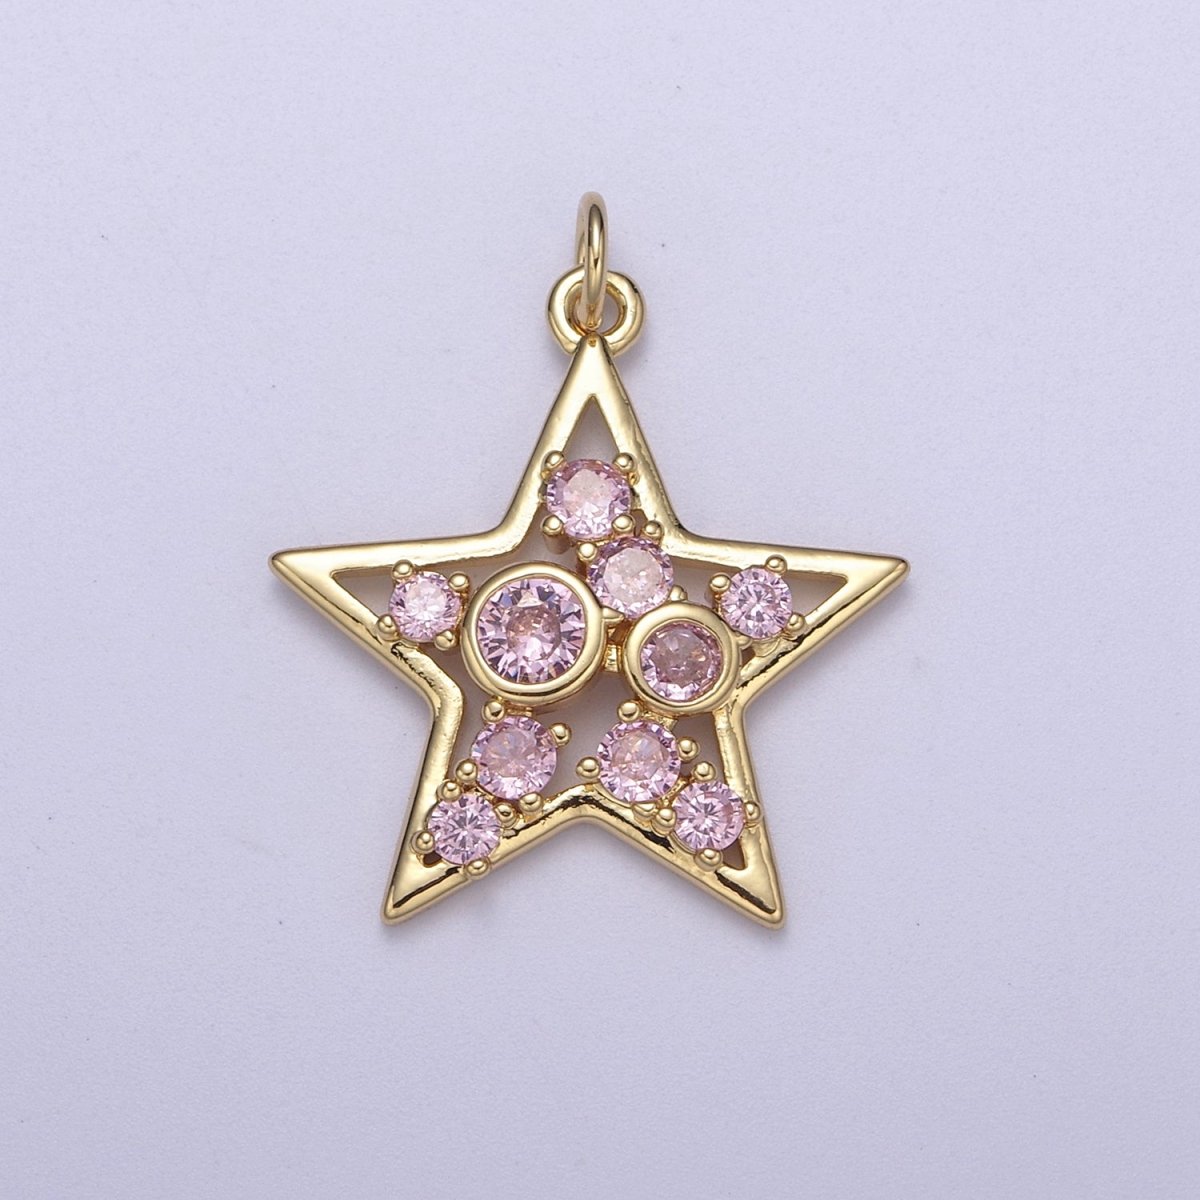 Twinkle Little Star Green Pink Cz Star Celestial Jewelry Inspired Pendant N-302 N-303 - DLUXCA